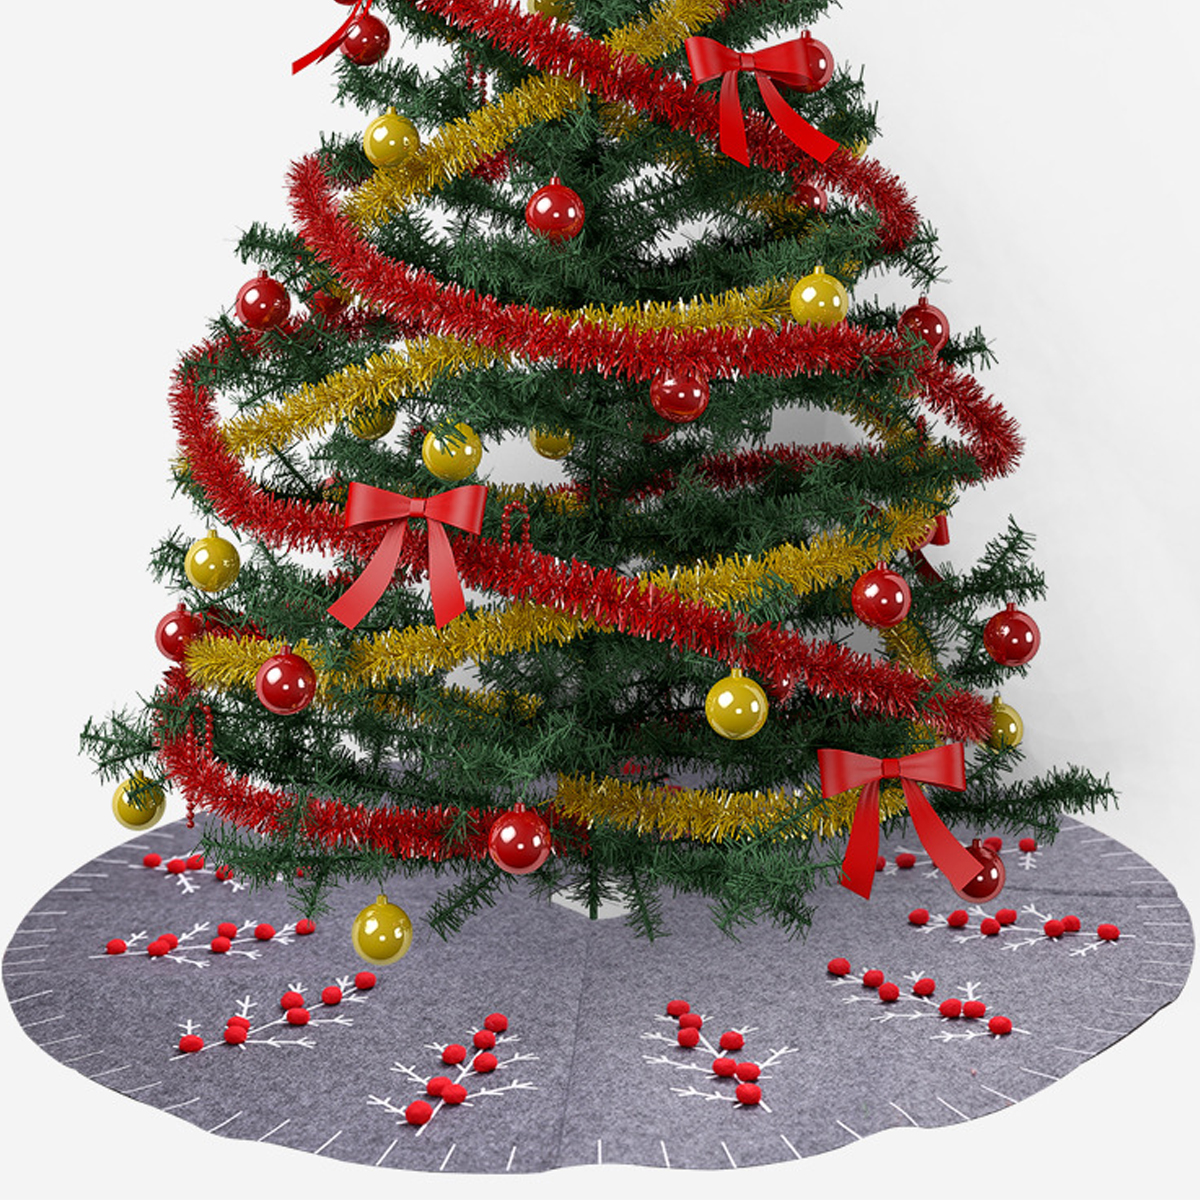 2020-Christmas-Decor-120cm-New-Year-Xmas-Tree-Carpet-Foot-Cover-Christmas-Tree-Skirt-Aprons-for-Home-1770953-11